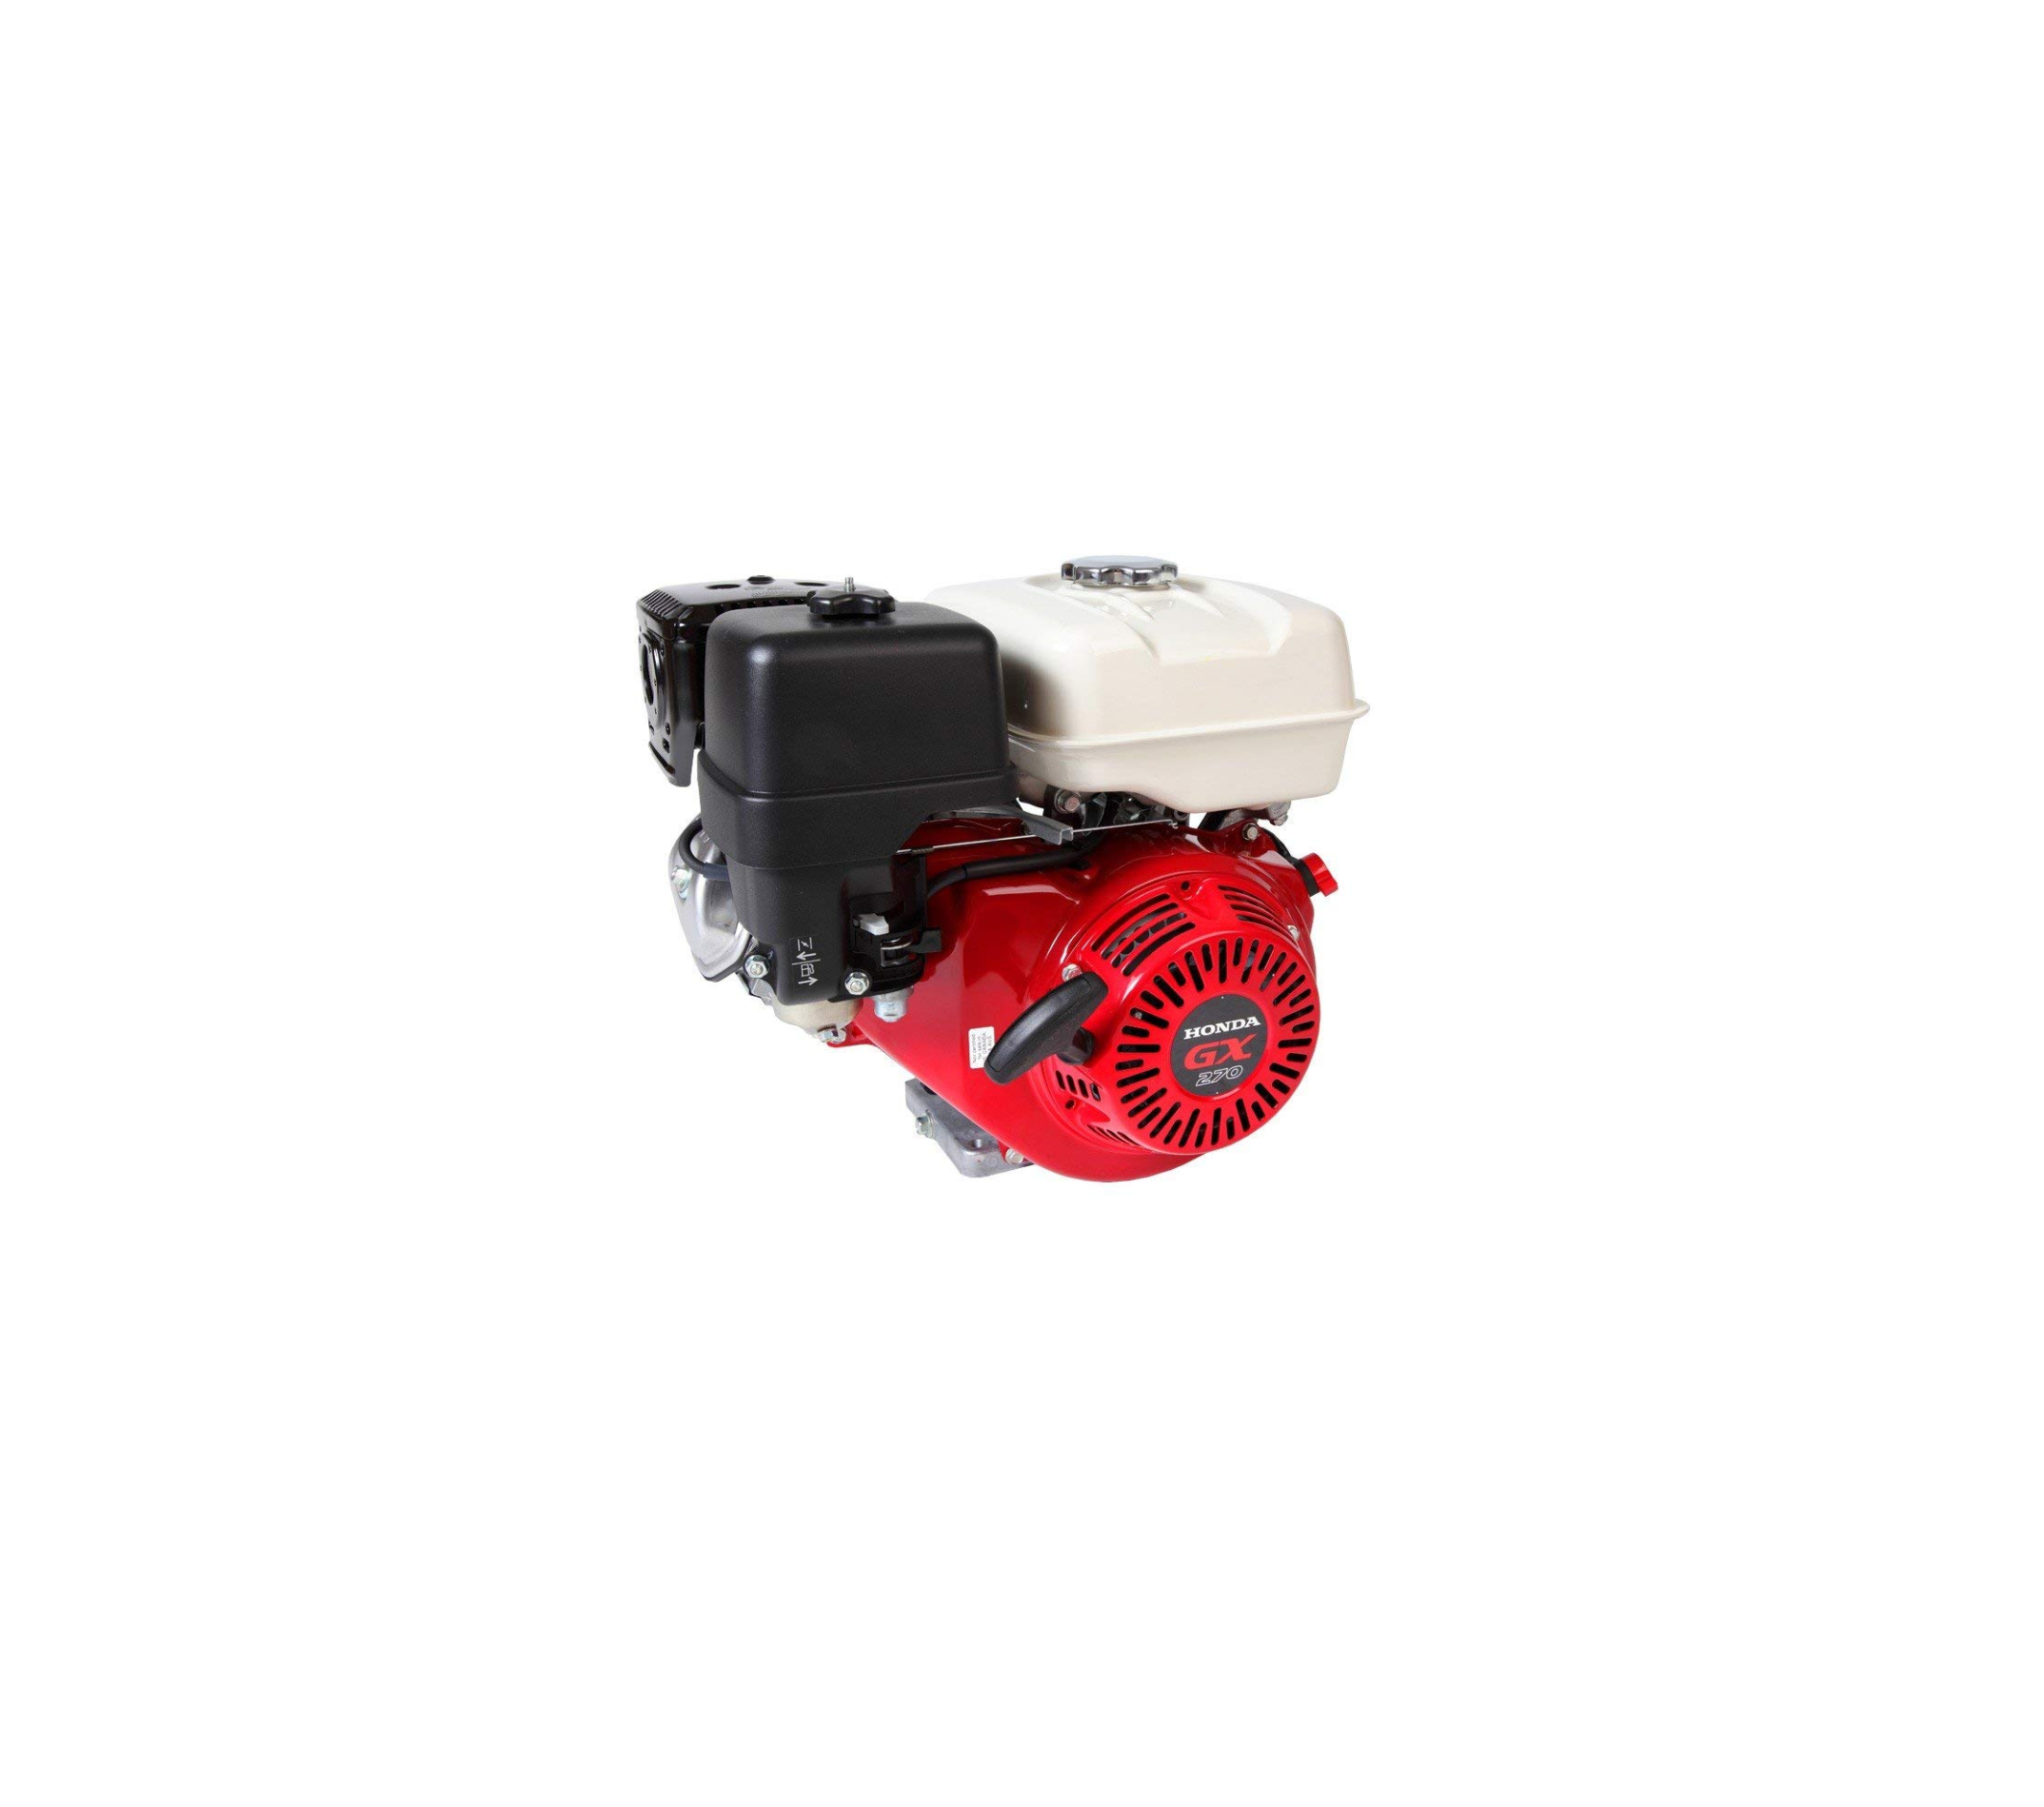 Honda Engine GX240 Mortar Mixer Motor Replacement Engine 6:1 Ratio